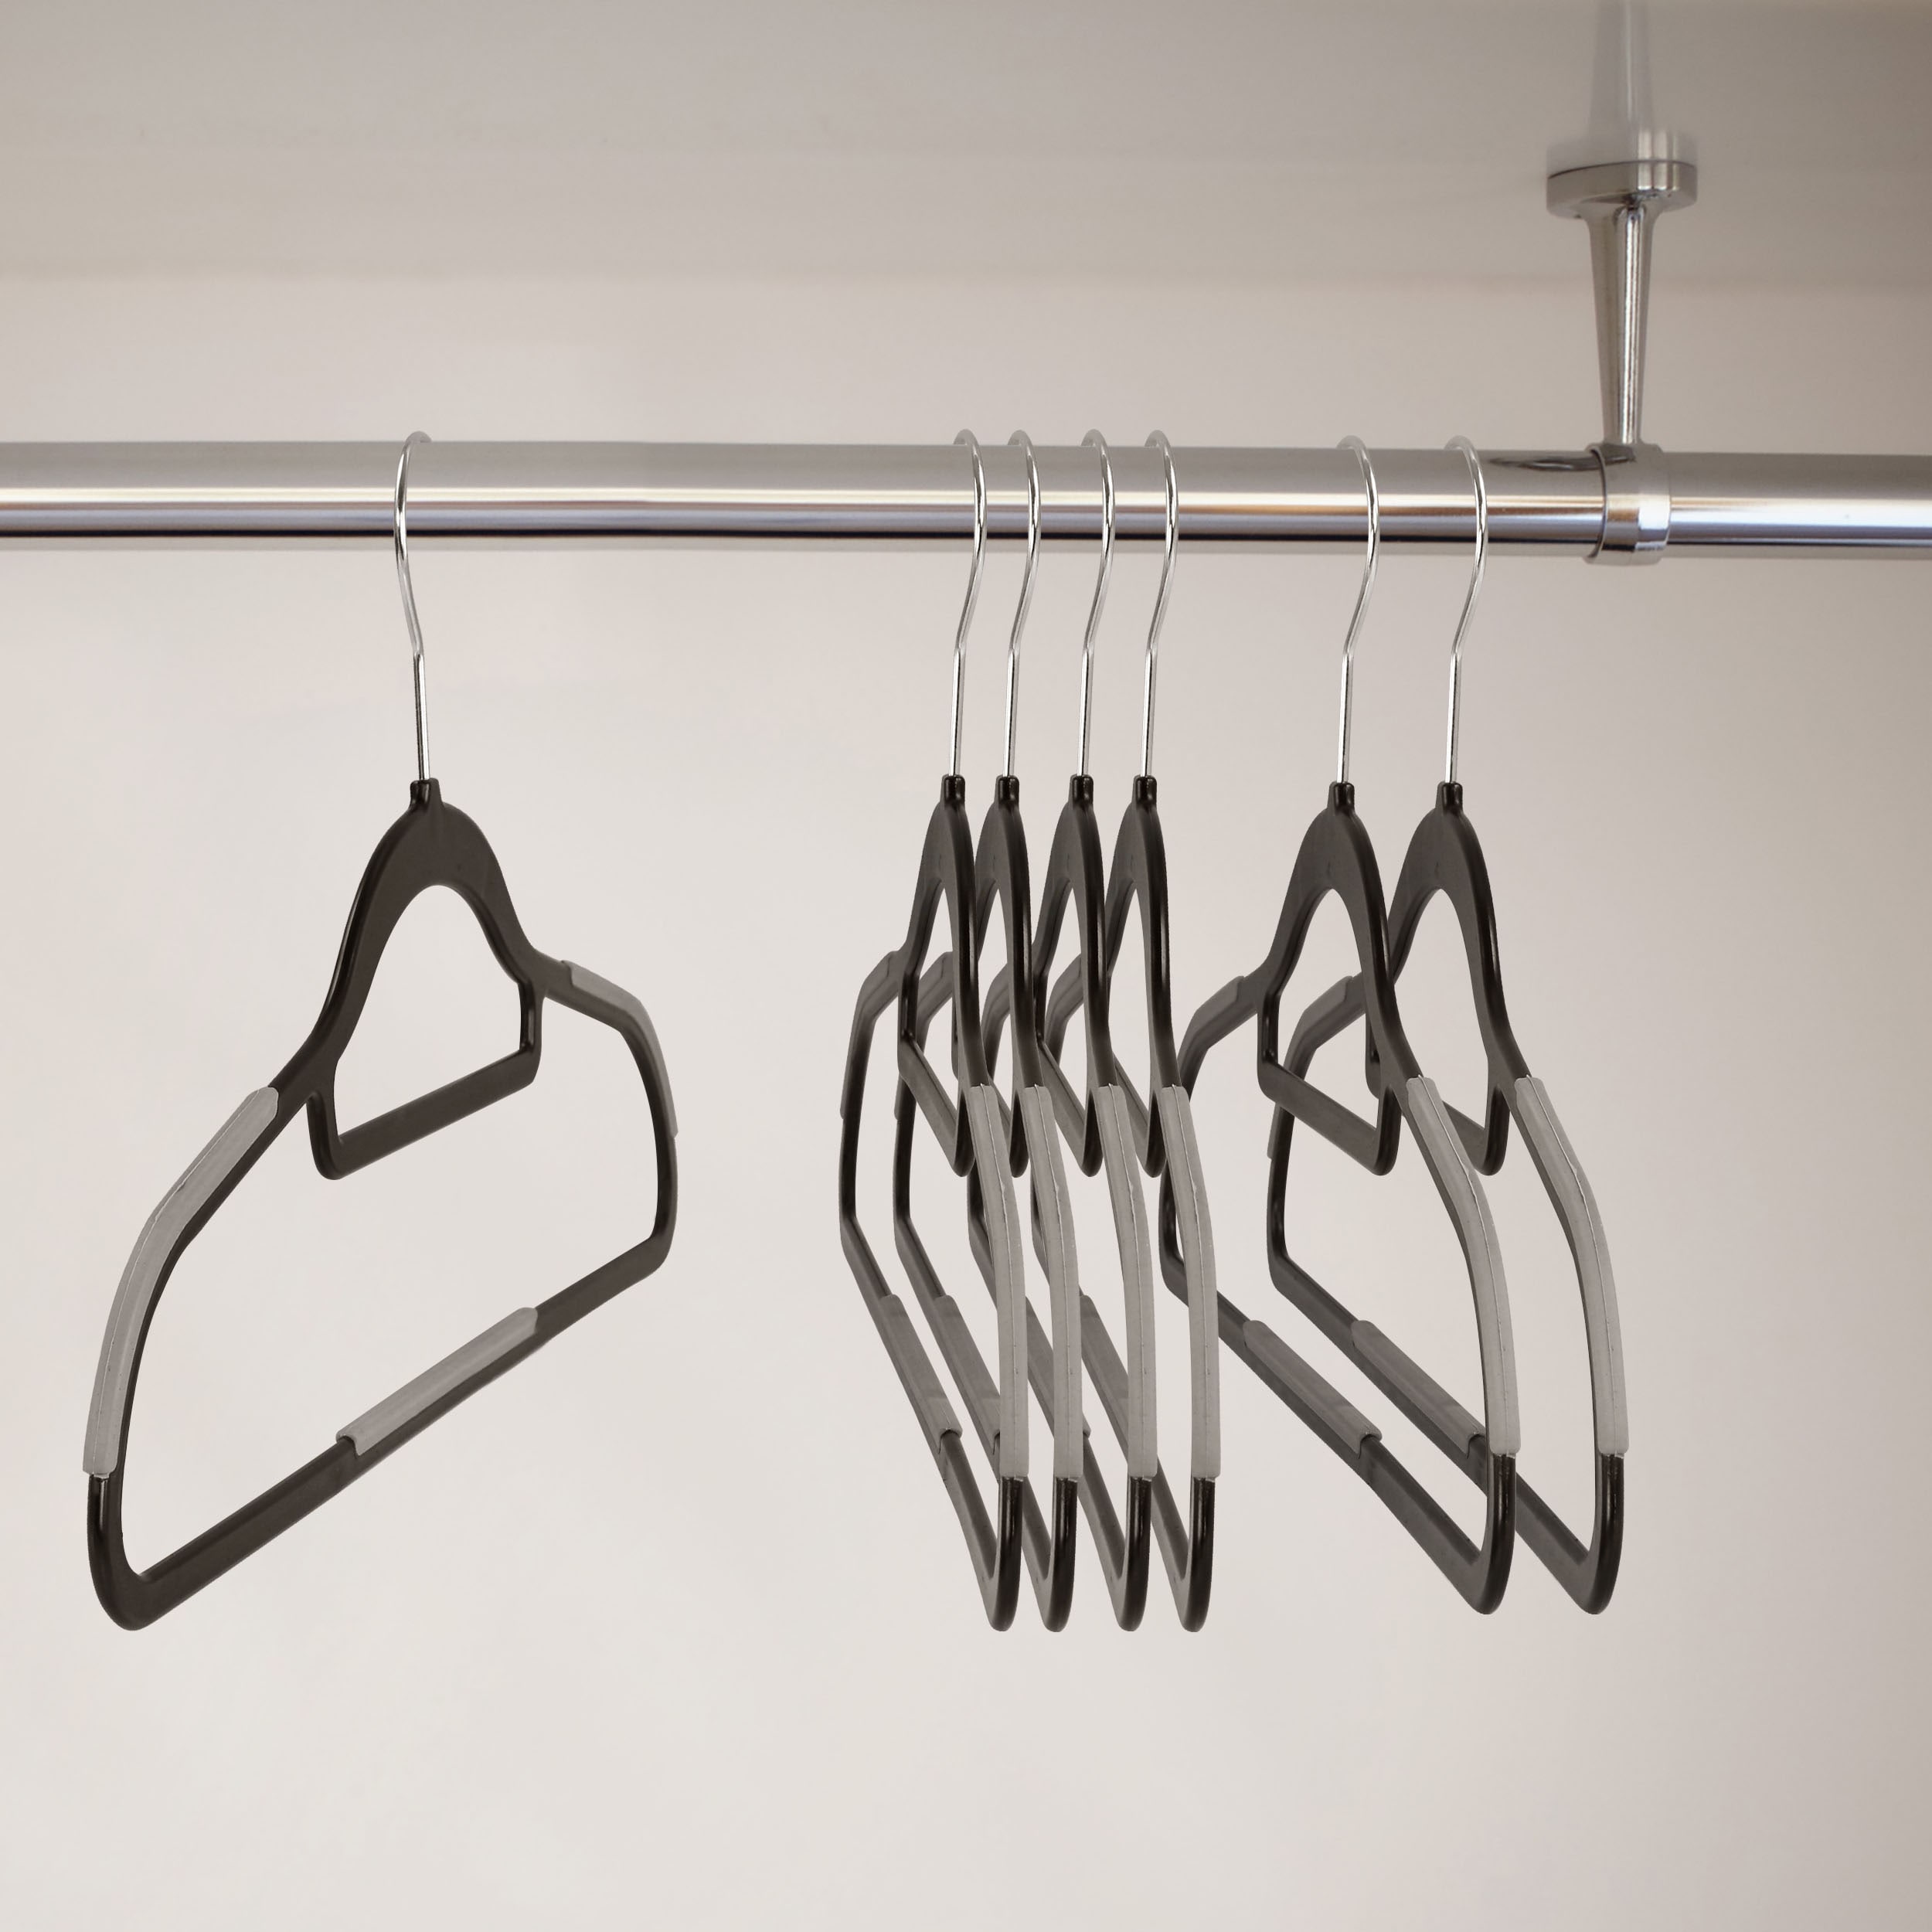 StorageWorks 24-Pack Wood Non-slip Grip Clothing Hanger (Retro) in